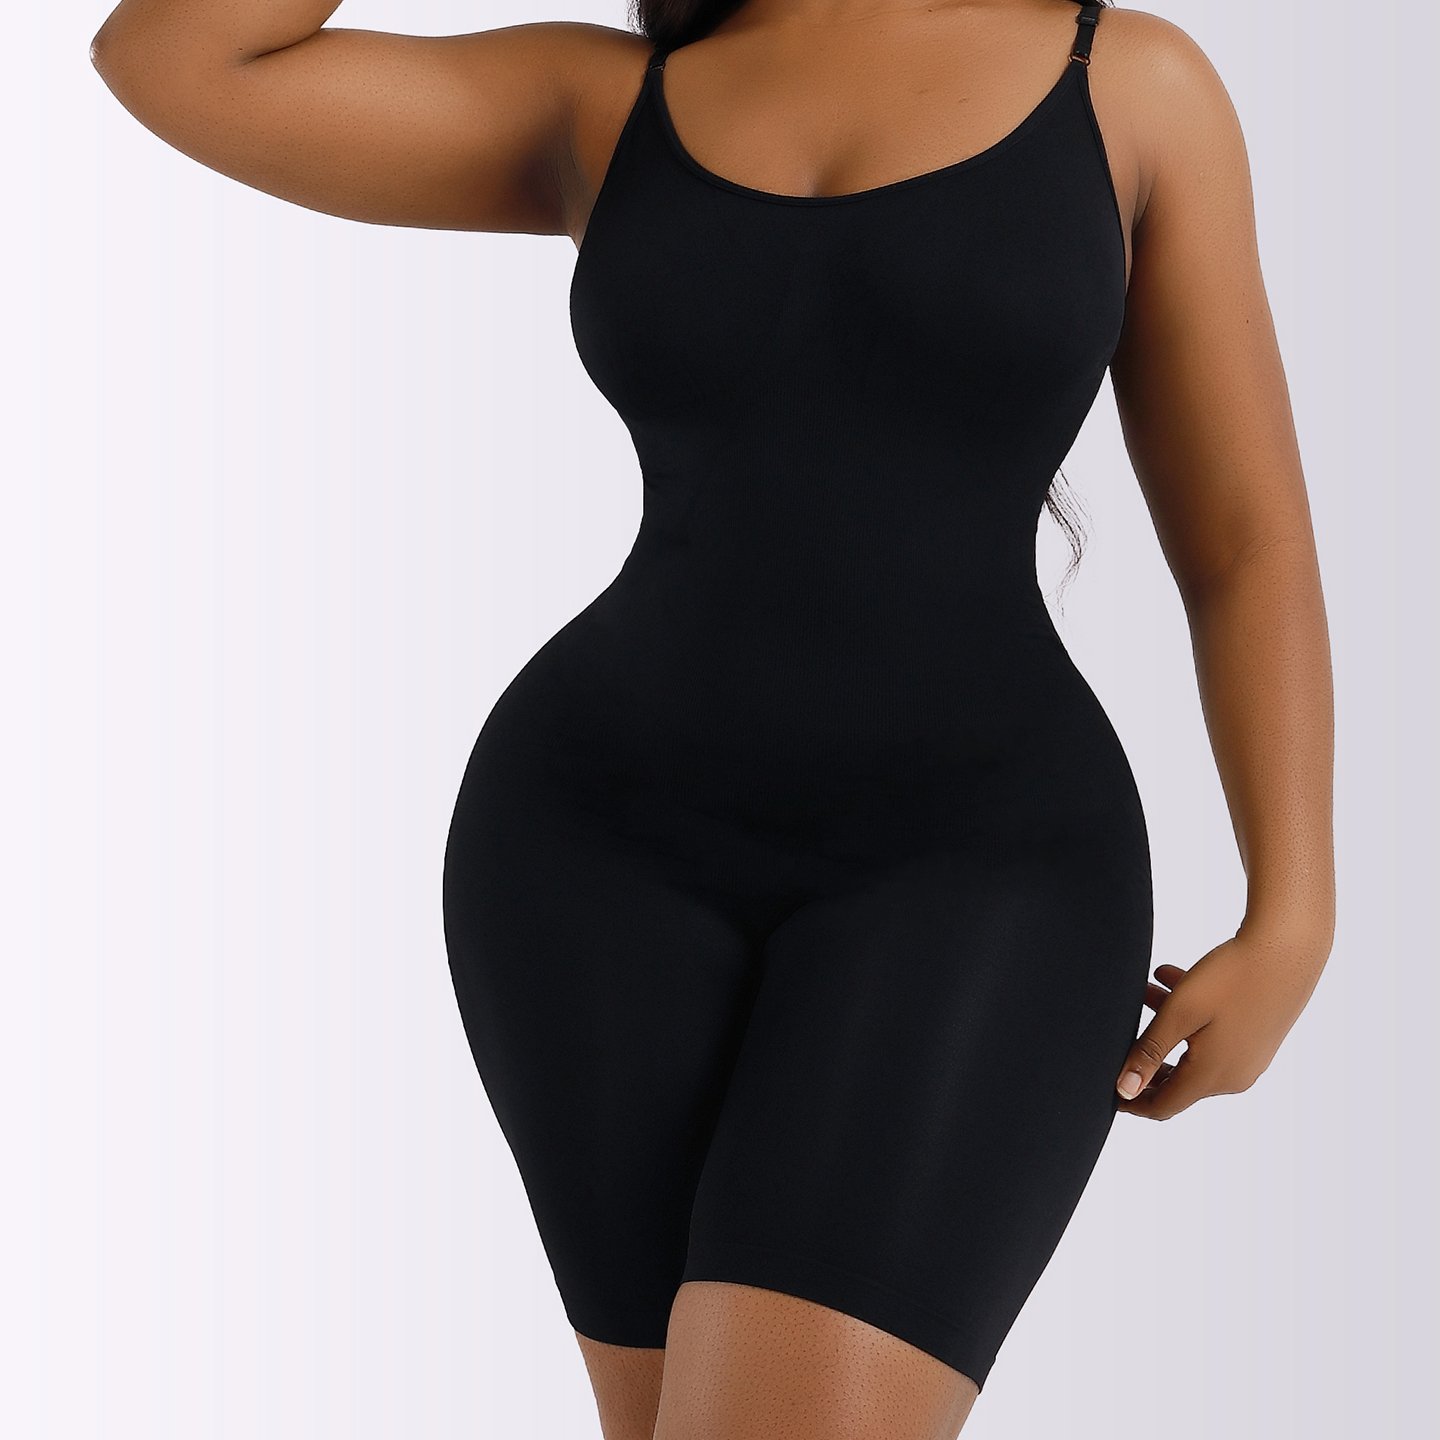 nsendm Female Underwear Adult Lady Body Bodysuit for Women Body Shaper  Square Neck Sleeveless Tank Tops Bodysuits Fr under Garments(Black, M) 